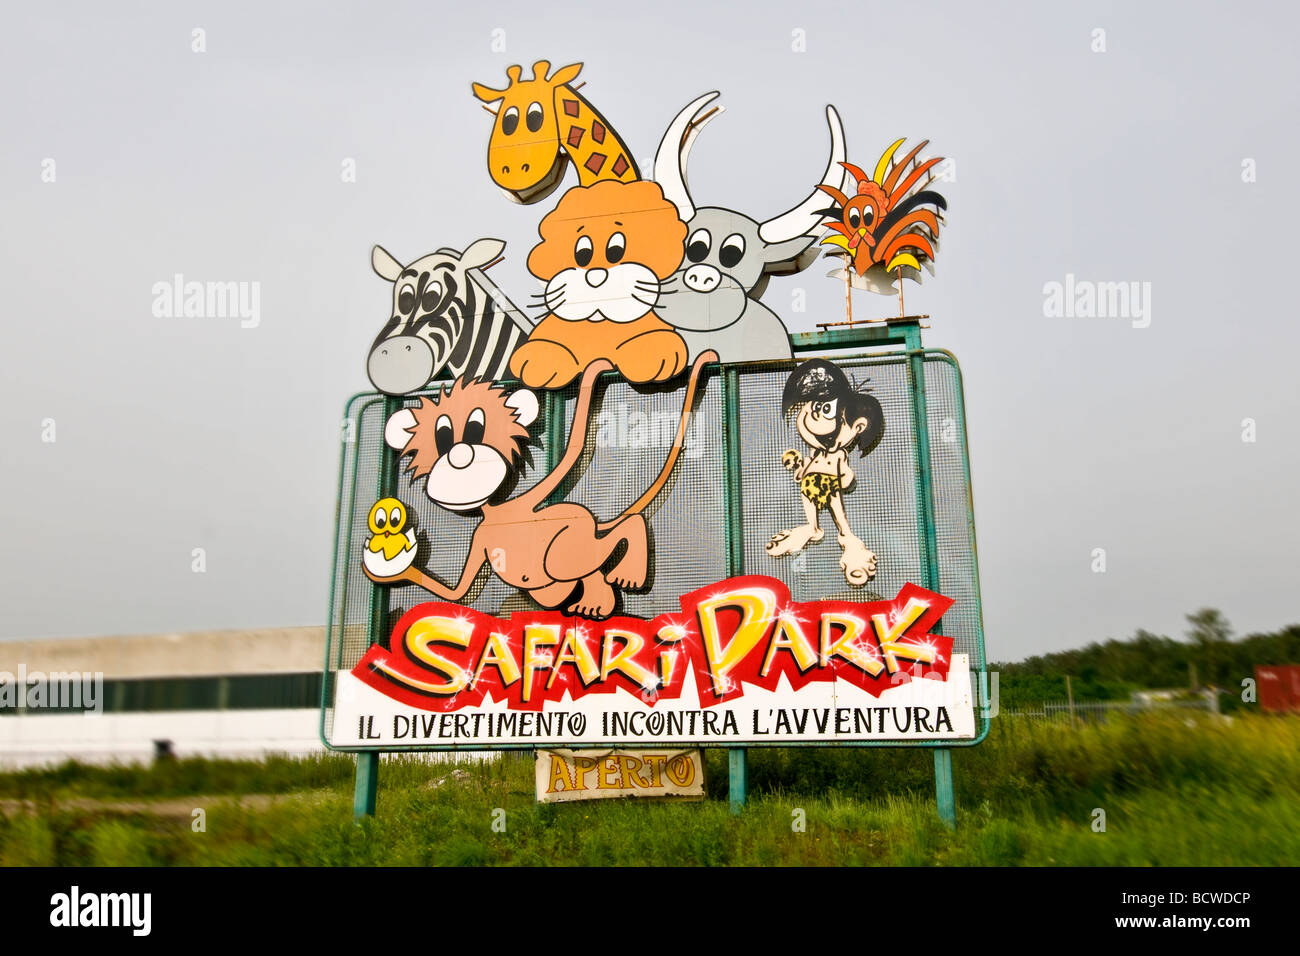 zoo safari provincia di novara